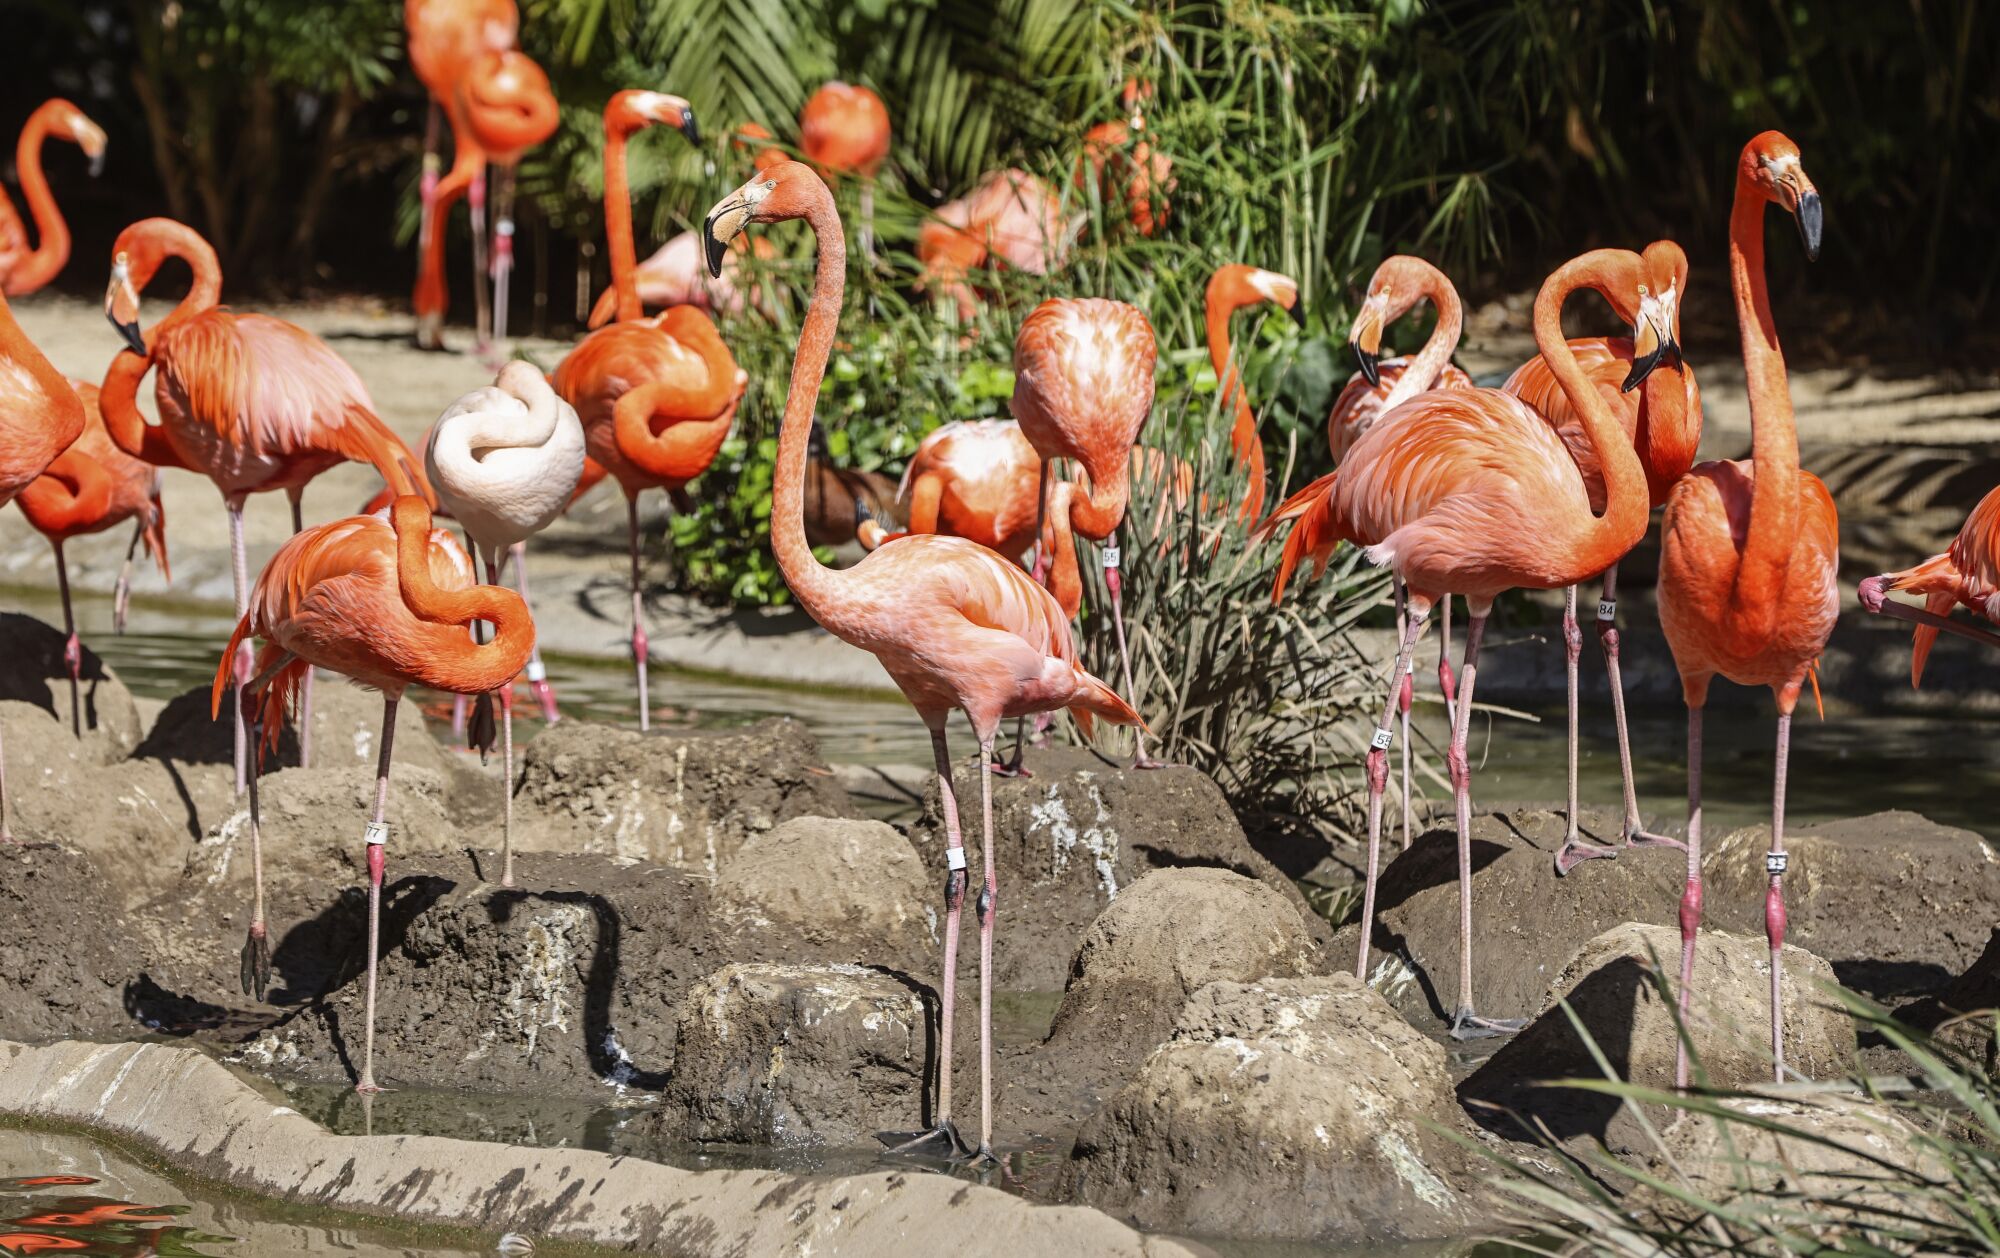 Flamingos crowd their habitat at the San Diego Zoo.